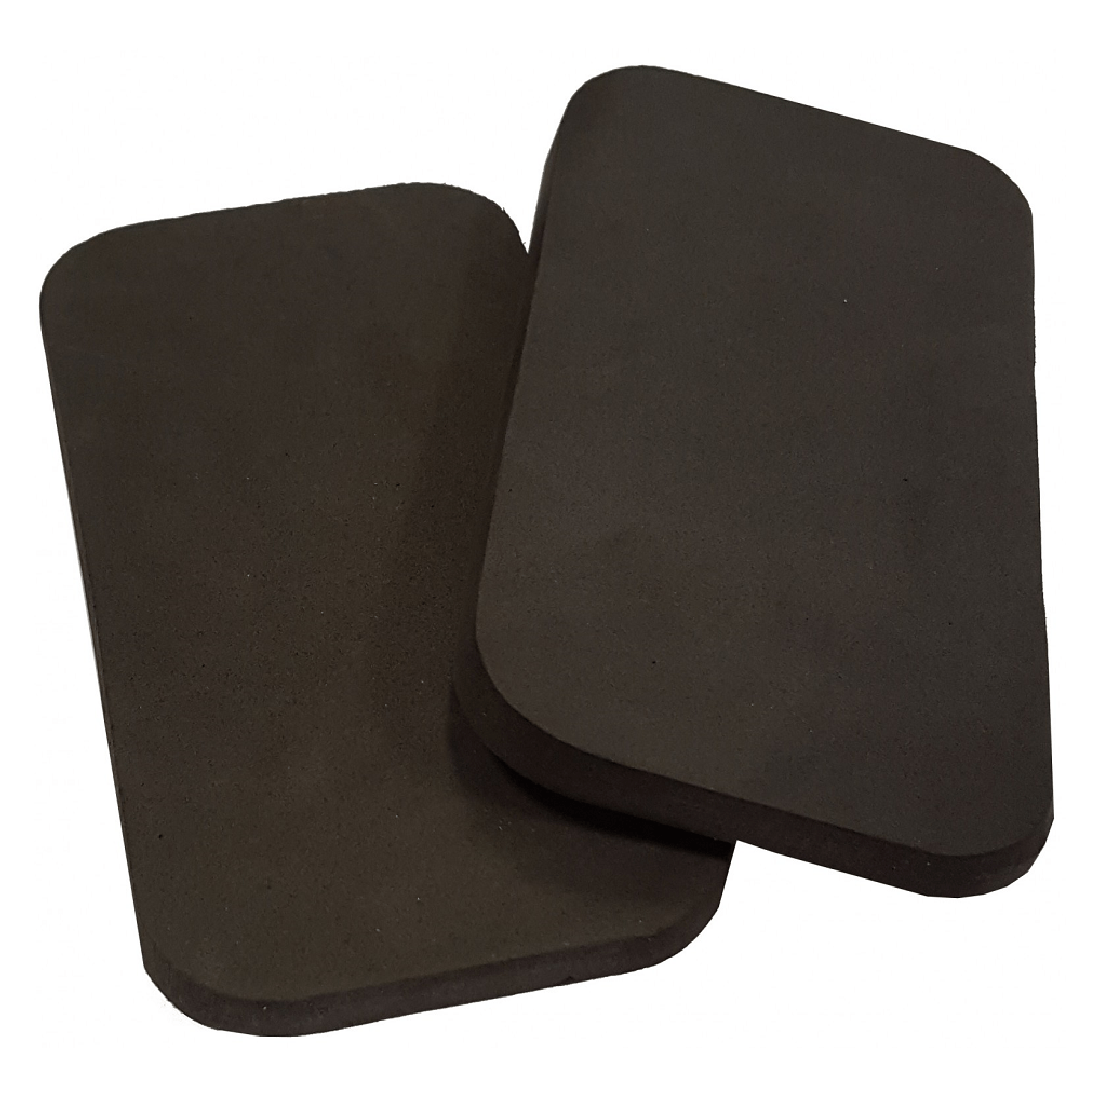 PORTWEST Shoulder Pads Foam Safety Comfort Scaffolding Factory Protection SP01 